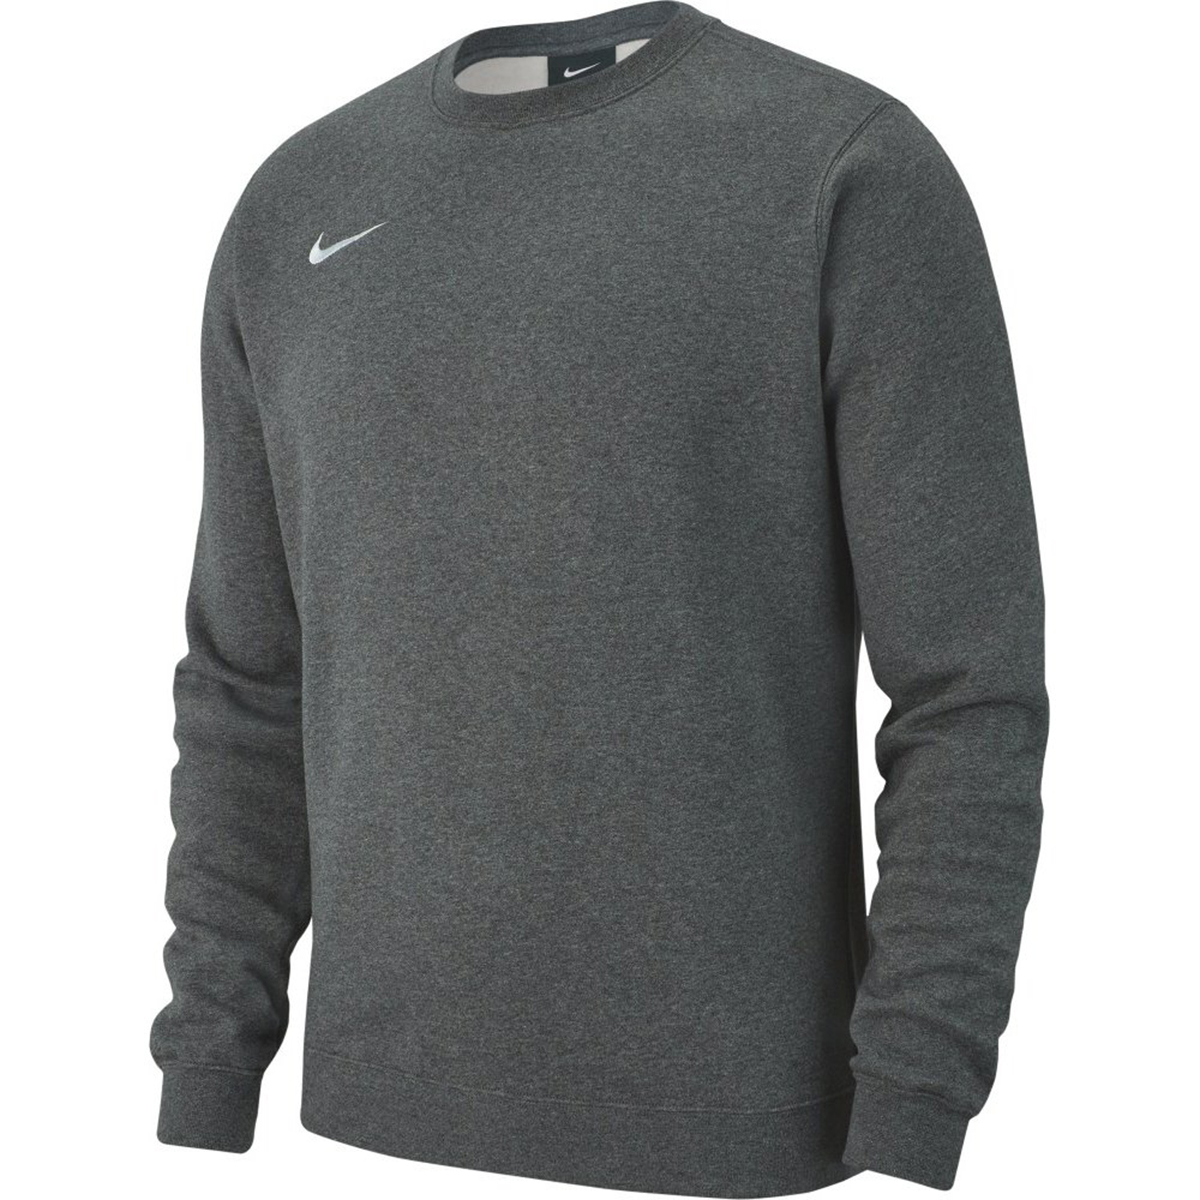 Nike Herren Sweatshirt TEAM CLUB 19 grau